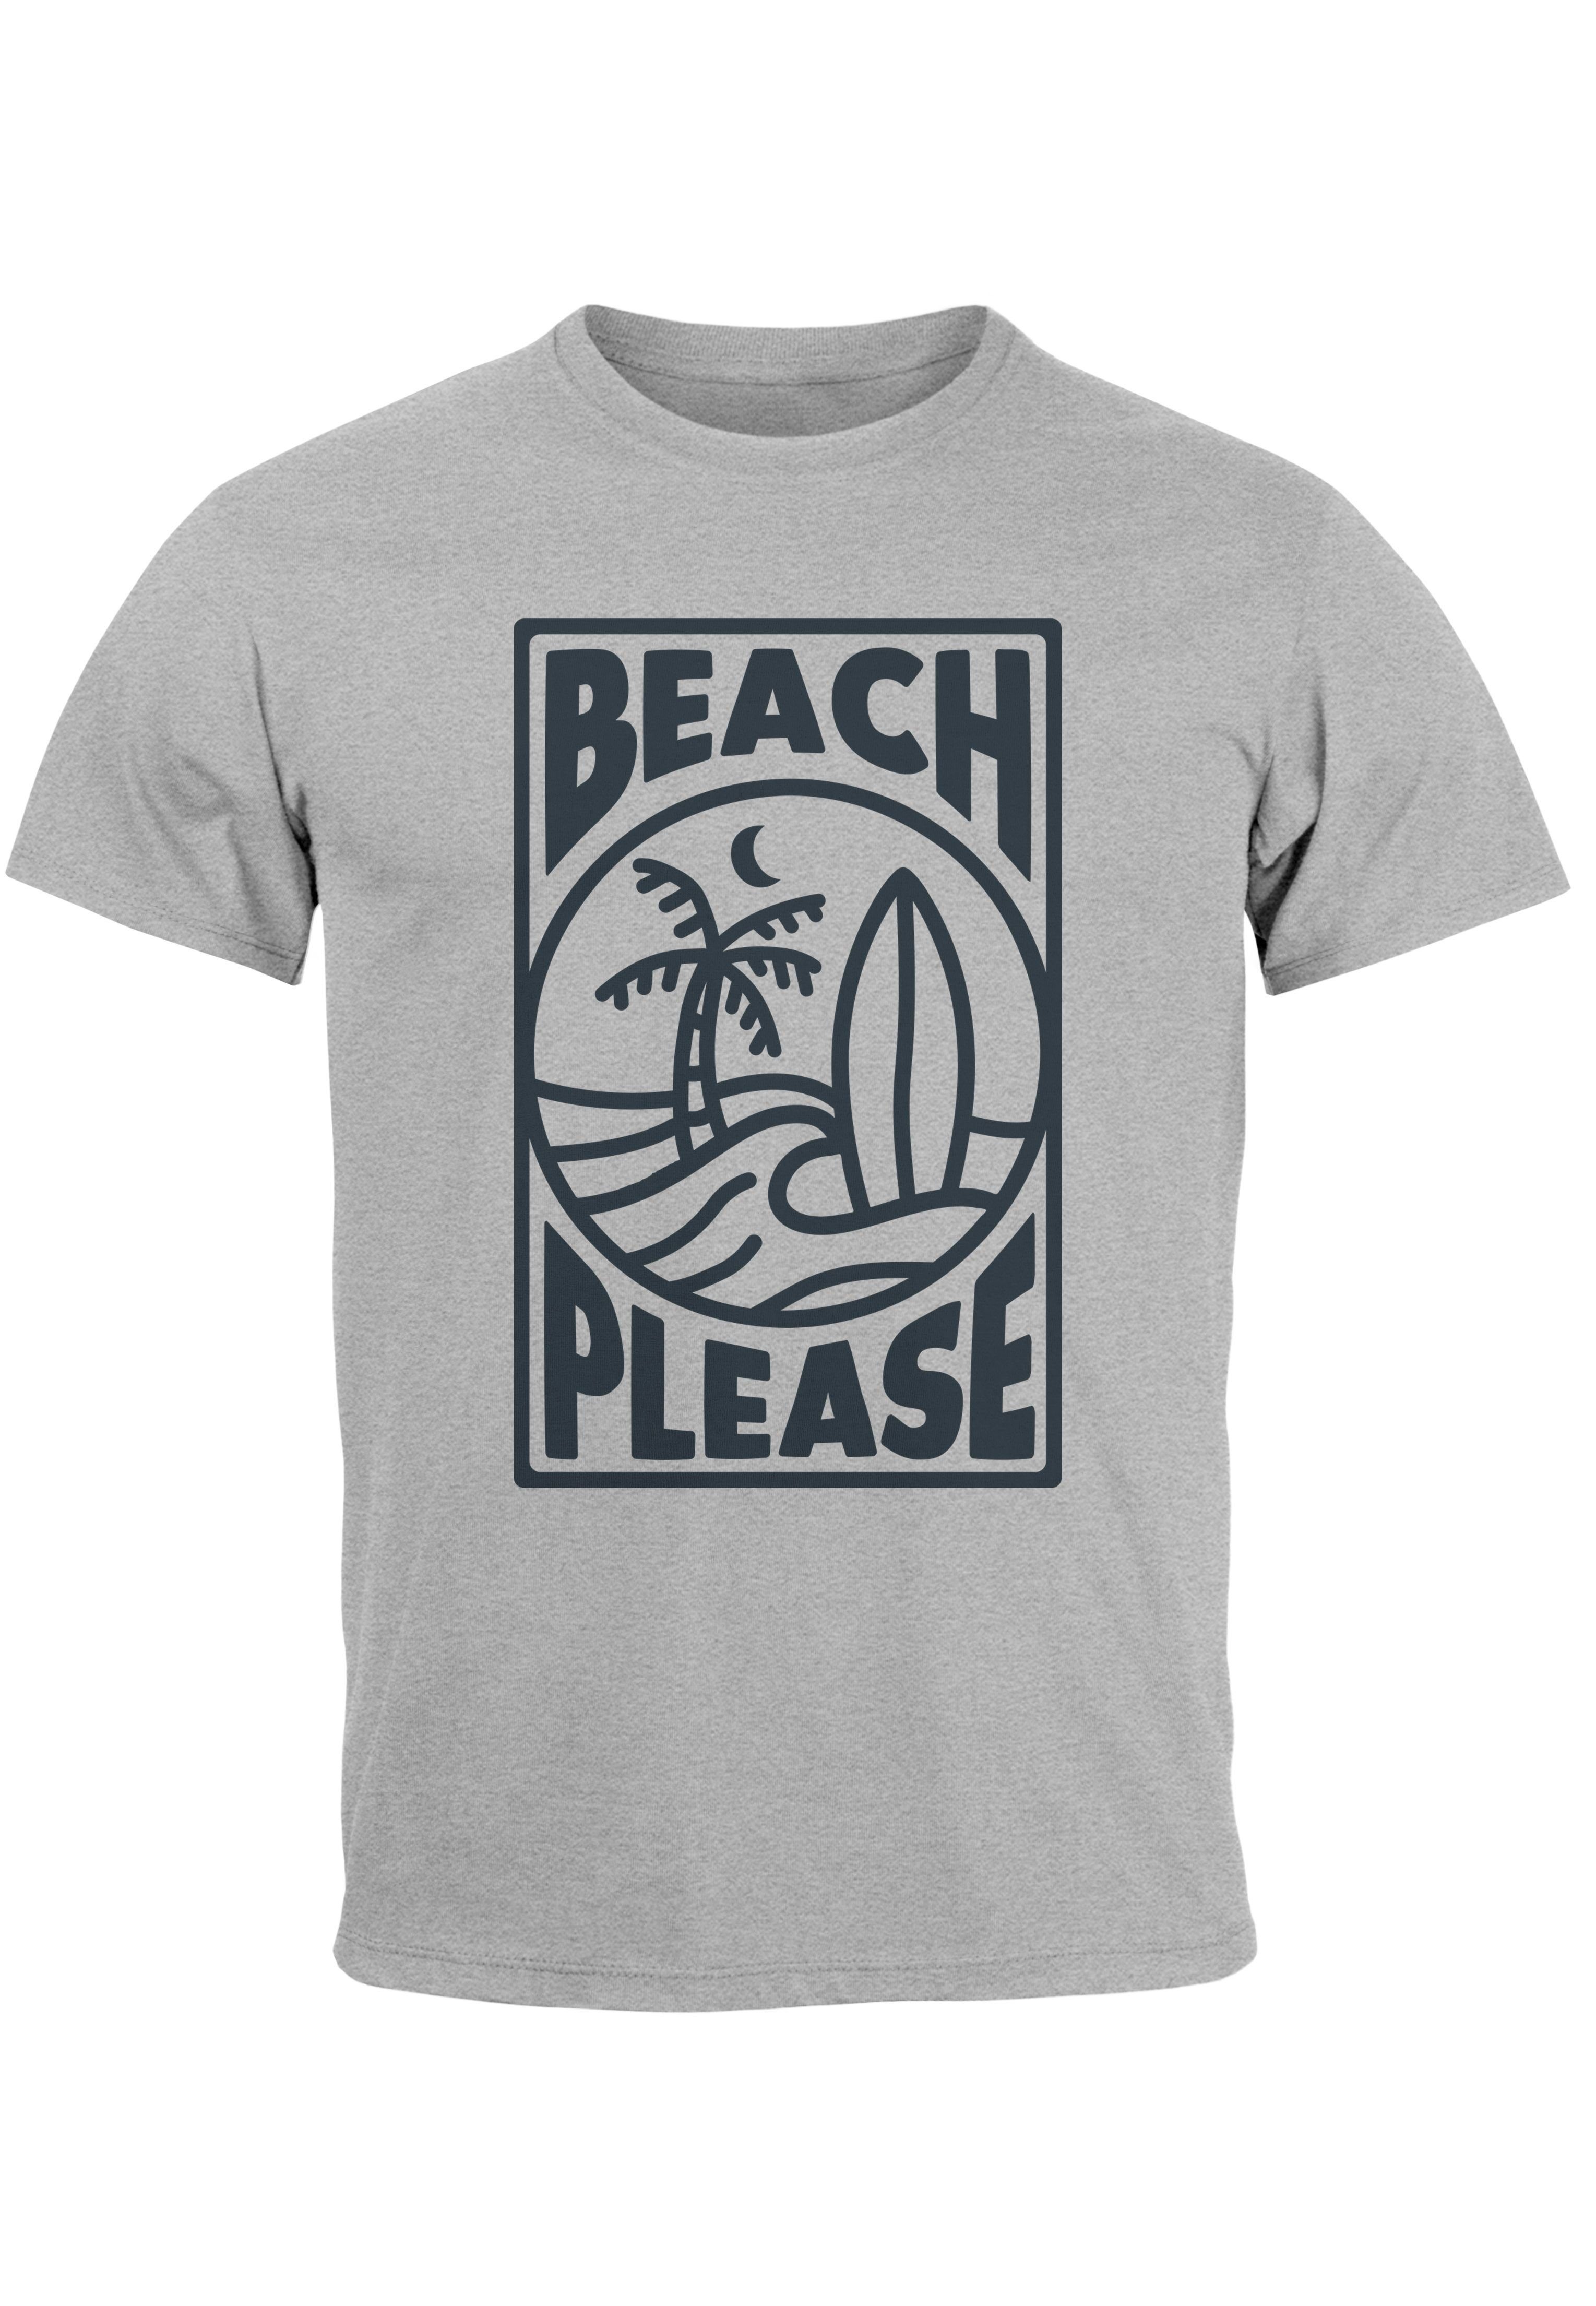 Neverless Print-Shirt Herren T-Shirt Beach Please Surfing Surfboard Wave Welle Sommer Print mit Print grau